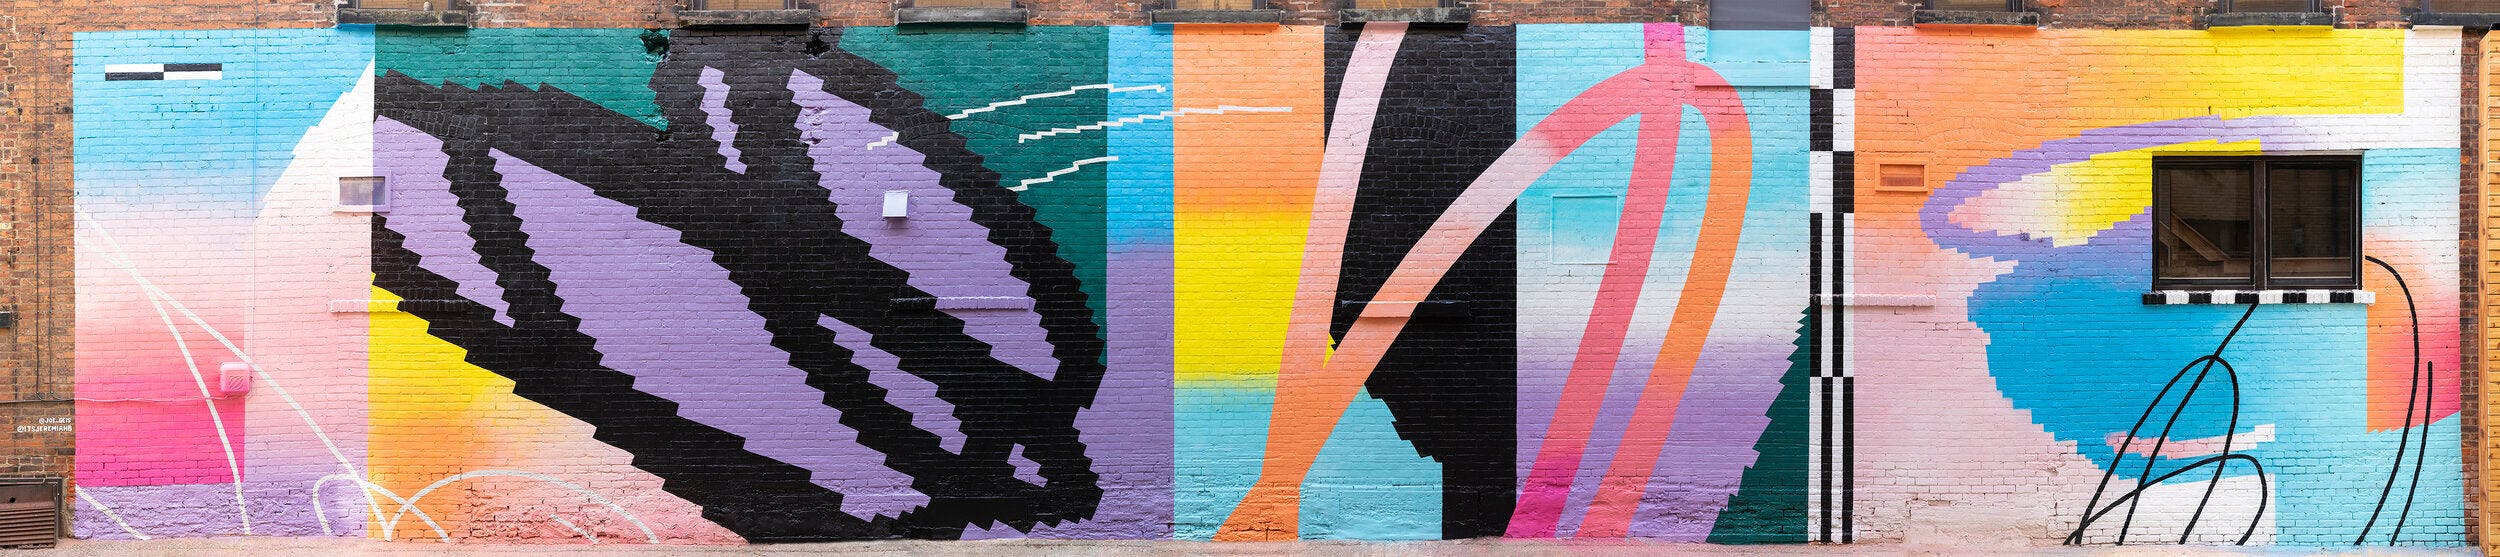 Installation by Joe Geis titled "Bright Walls Mural Festival - Jackson, MI".